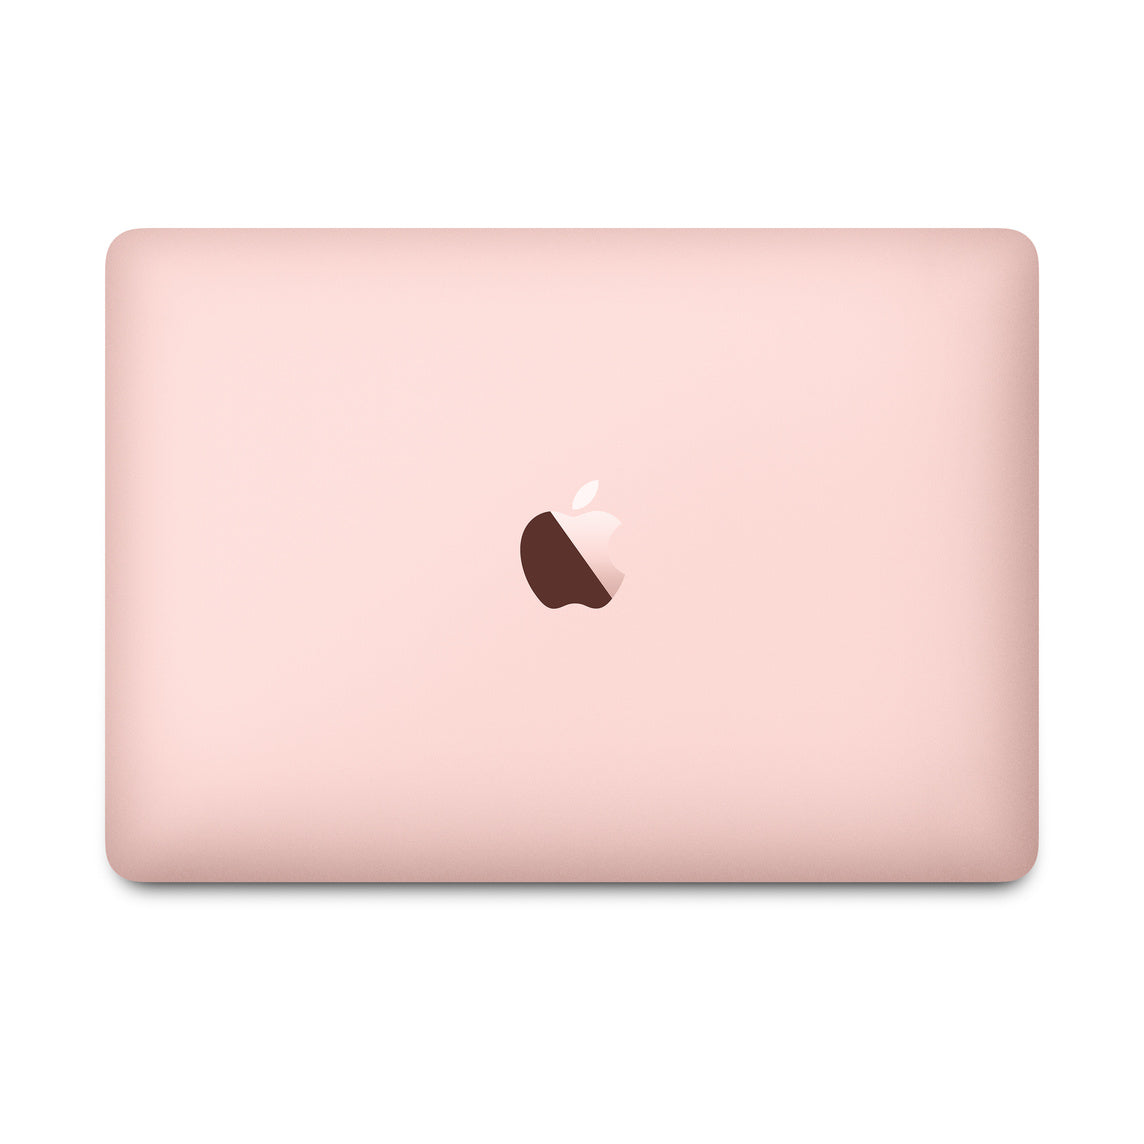 Apple MacBook 12'' MNYM2LL/A (2017) Laptop Intel Core M 8GB RAM 256GB SSD - Rose - Refurbished Good